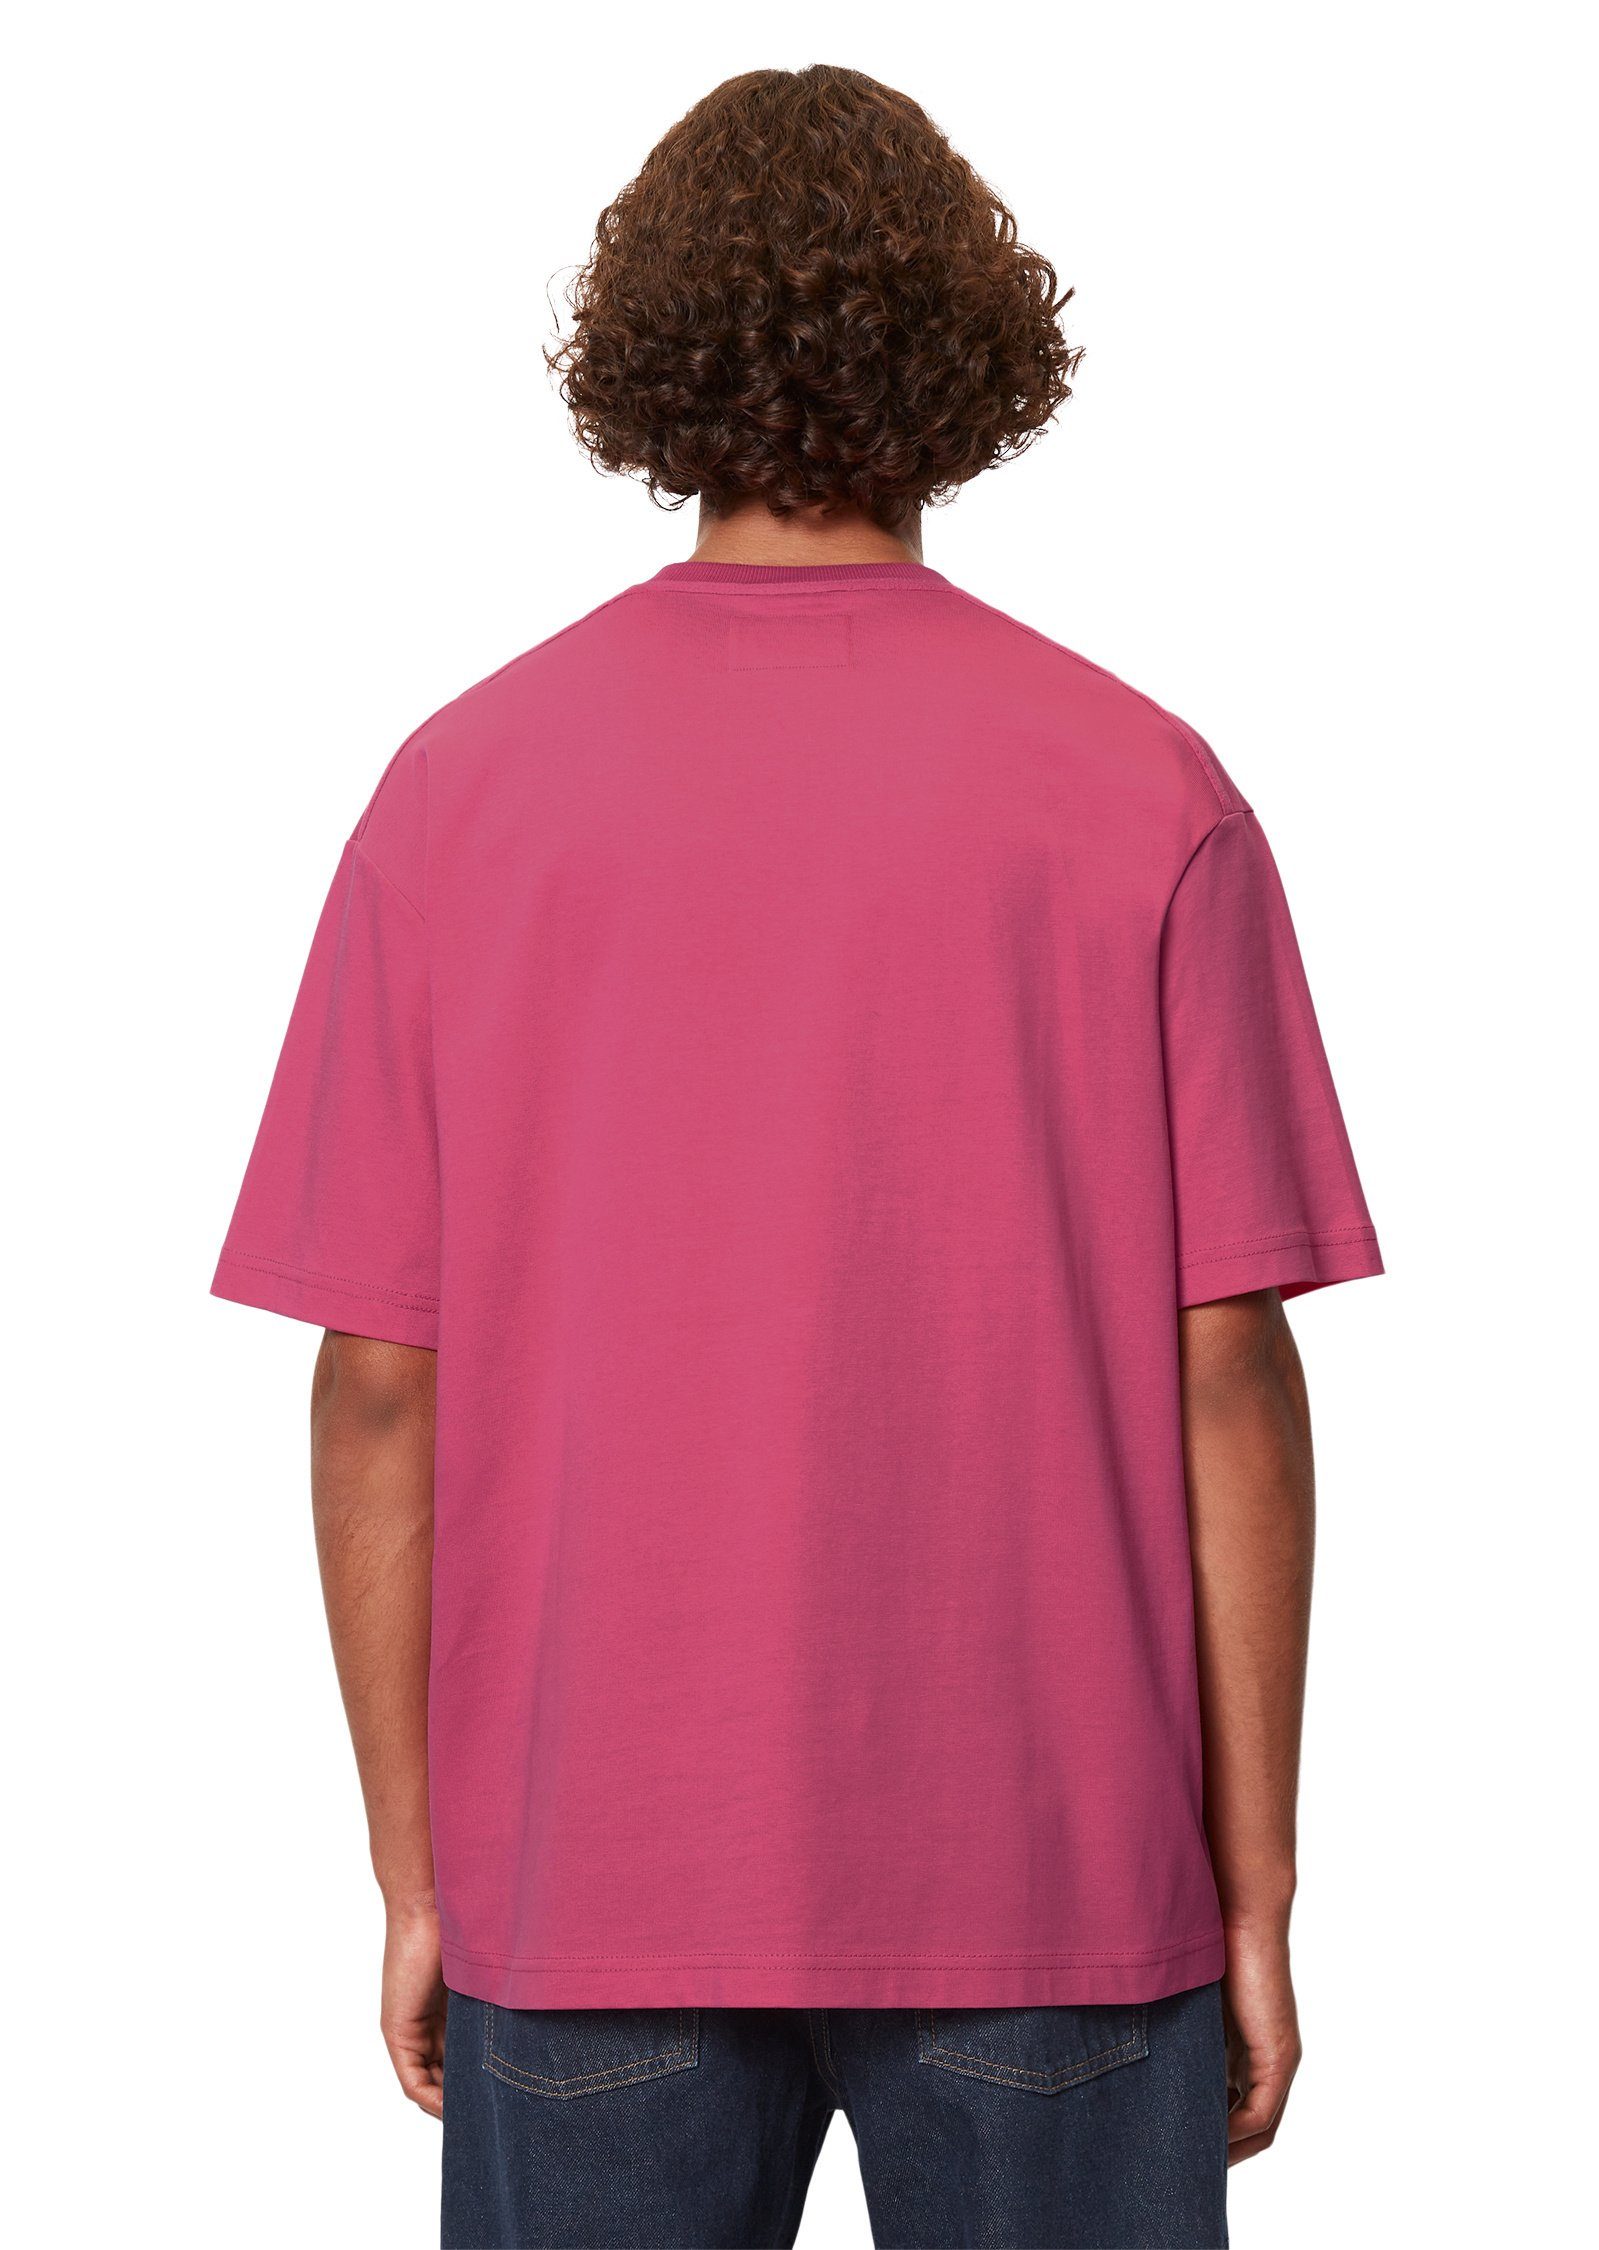 Marc O'Polo T-Shirt rosa reiner aus Bio-Baumwolle